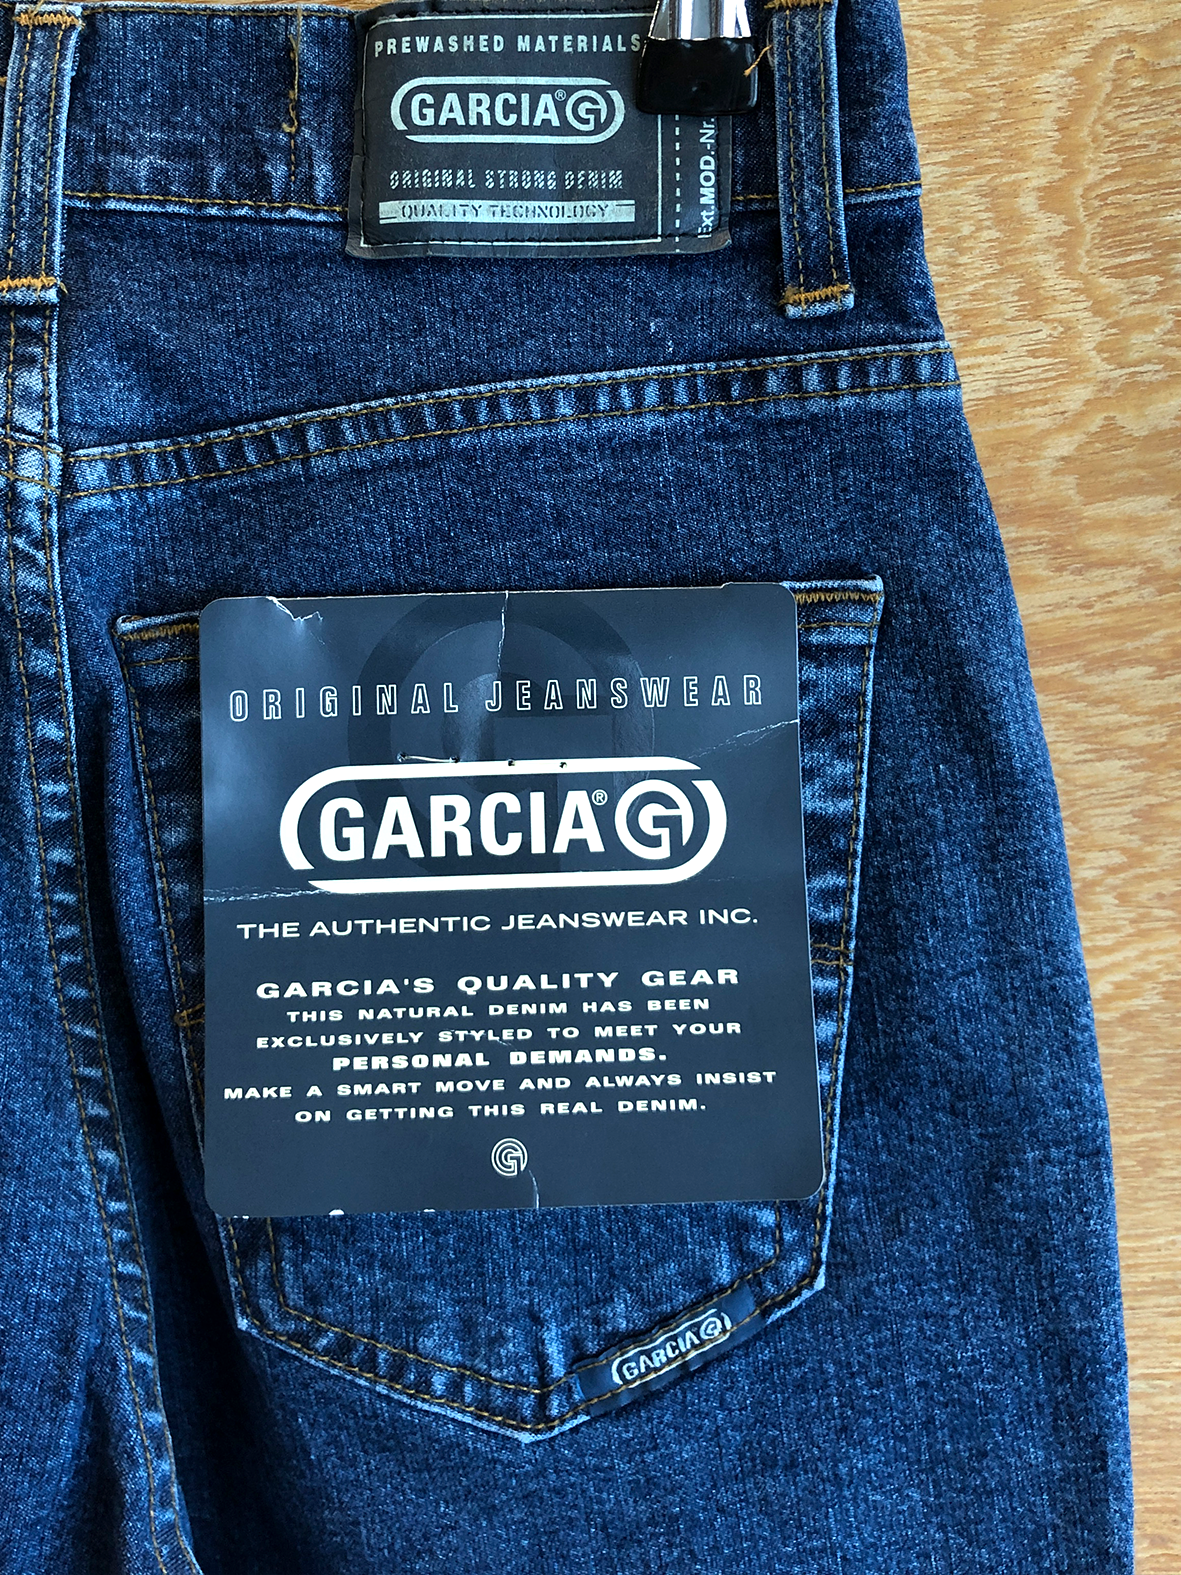 authentic jeanswear brand